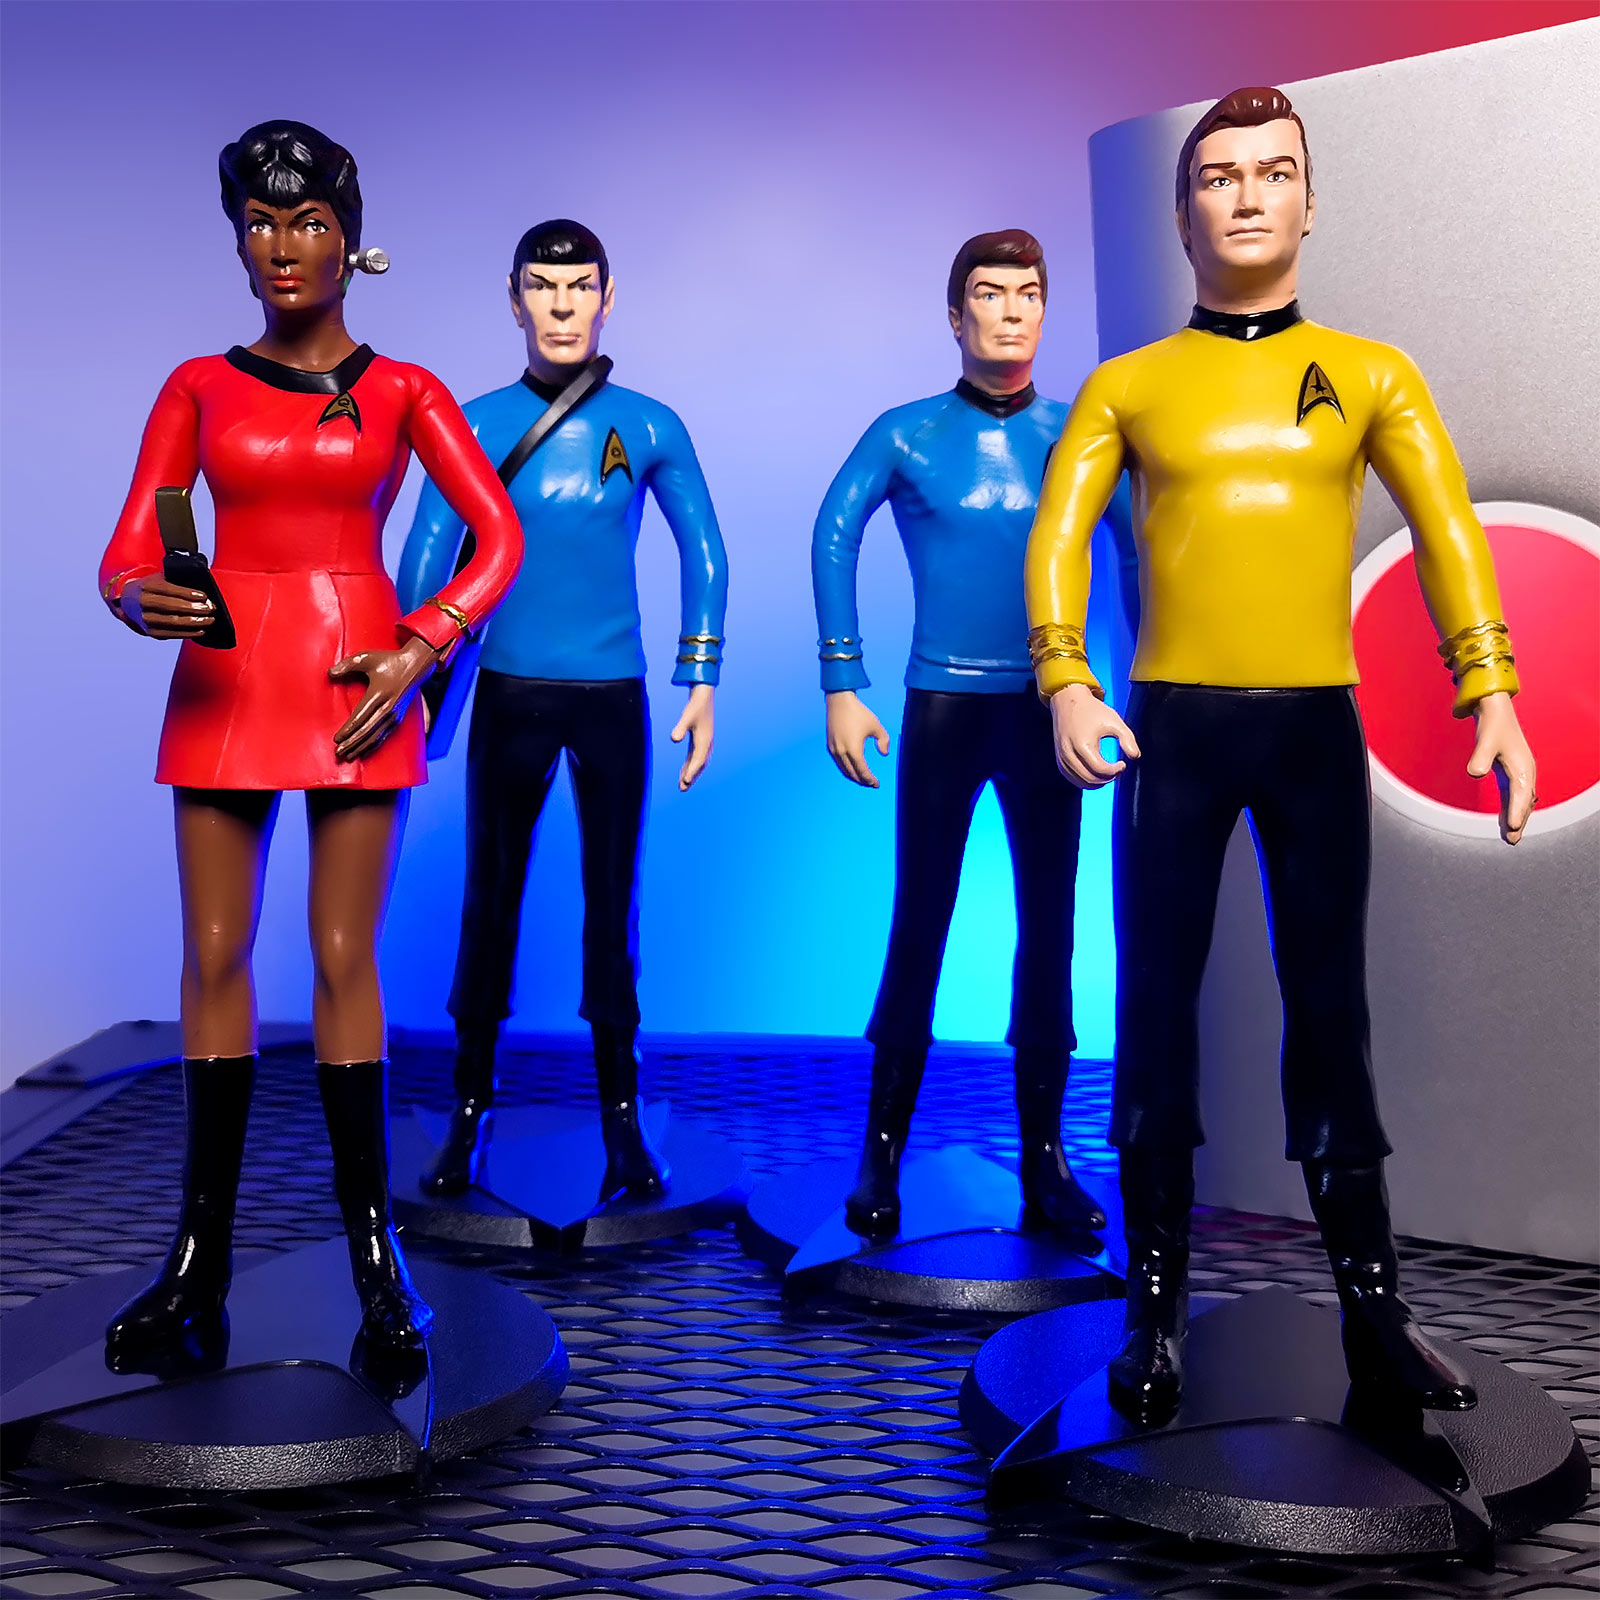 Star Trek - Spock Bendyfigs Figure 19 cm